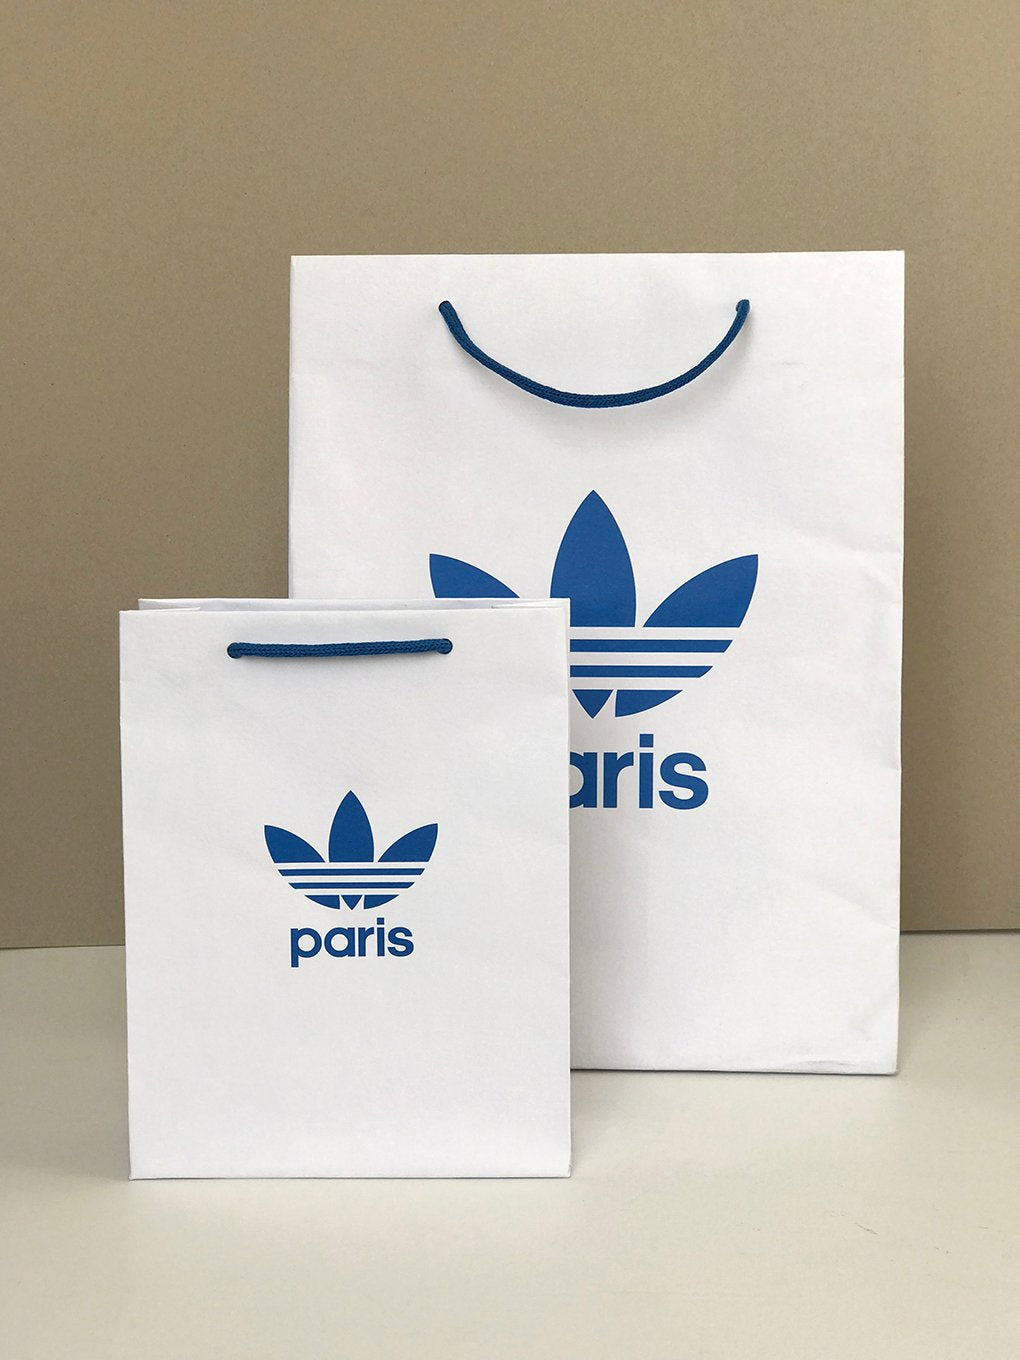 Adidas Originals bags - 2 limited 